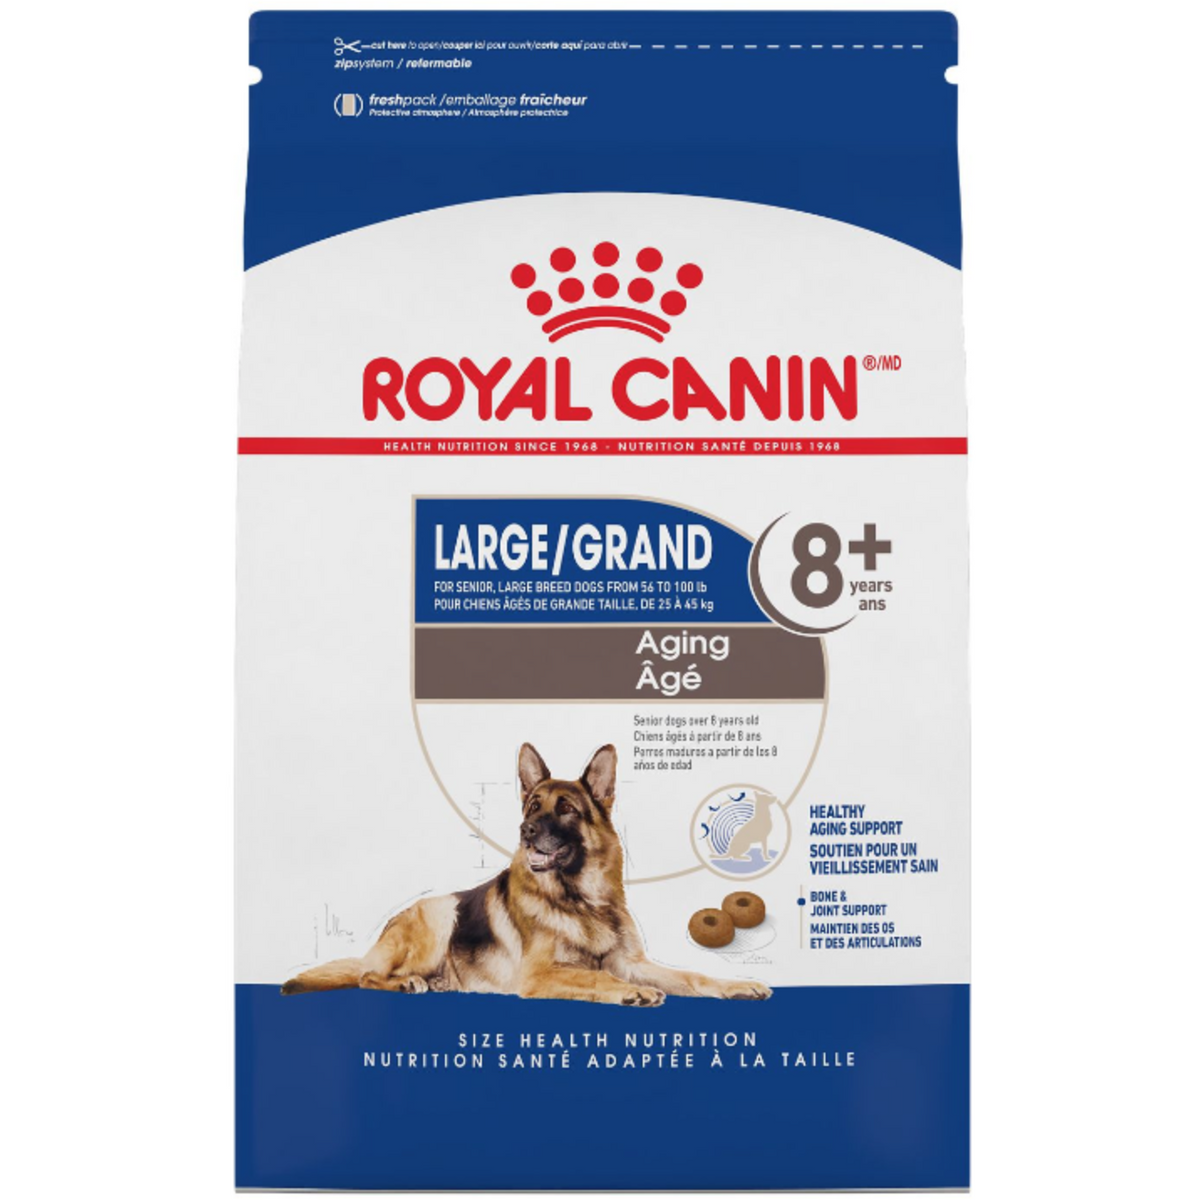 Royal Canin LARGE Aging 8+ Dog Food (30lb)